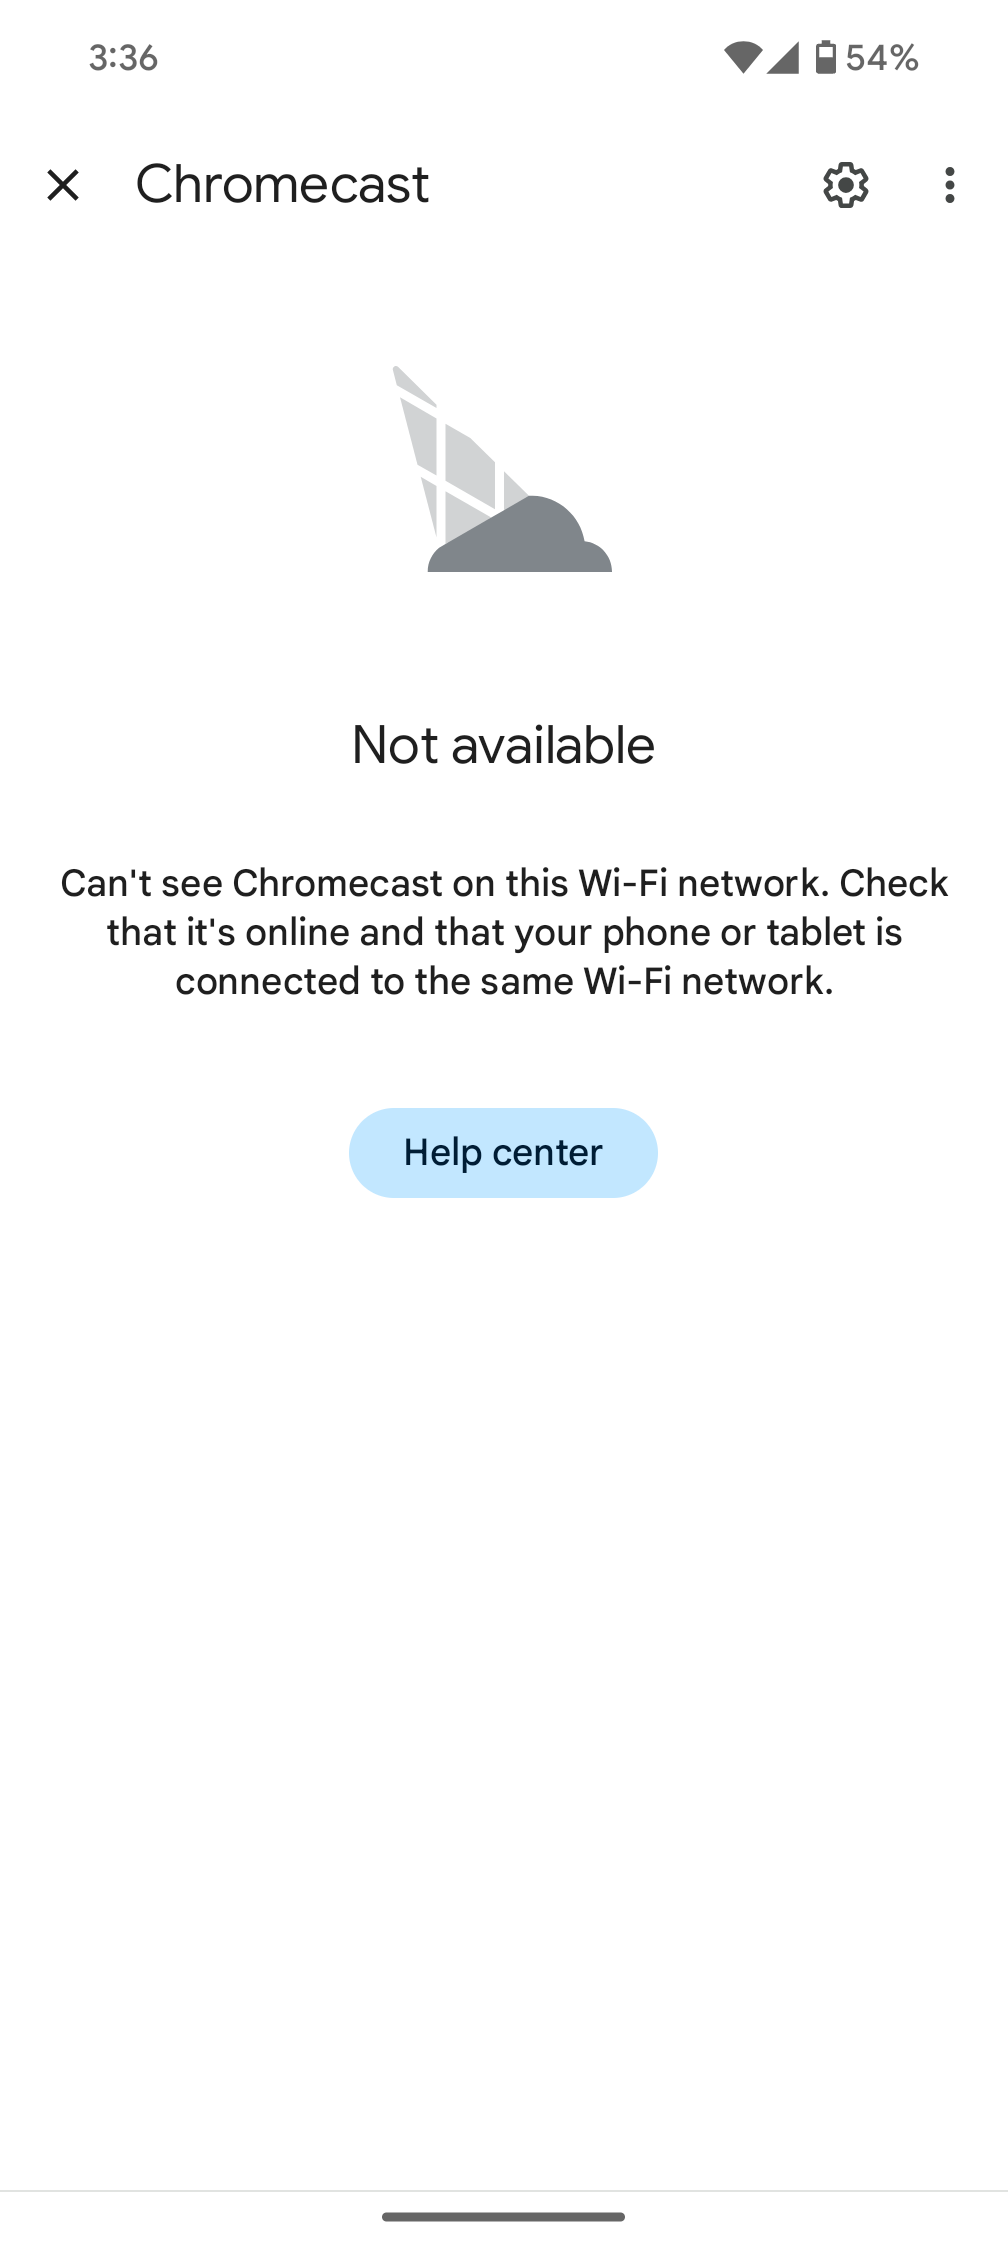 chromecast not available google home preview program